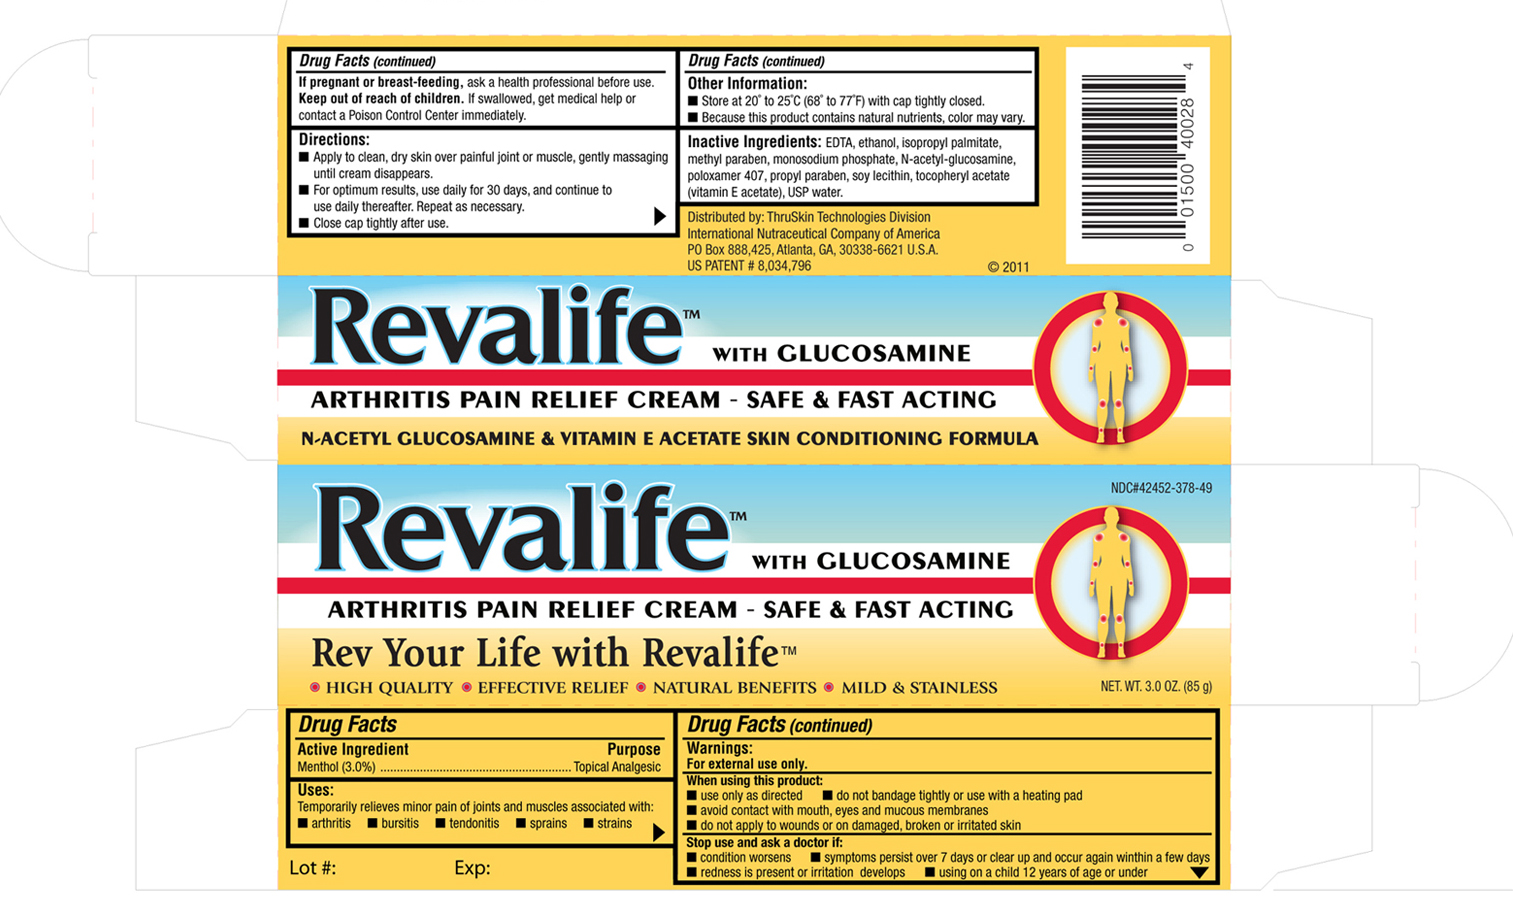 Revalife 3 ounce tube carton